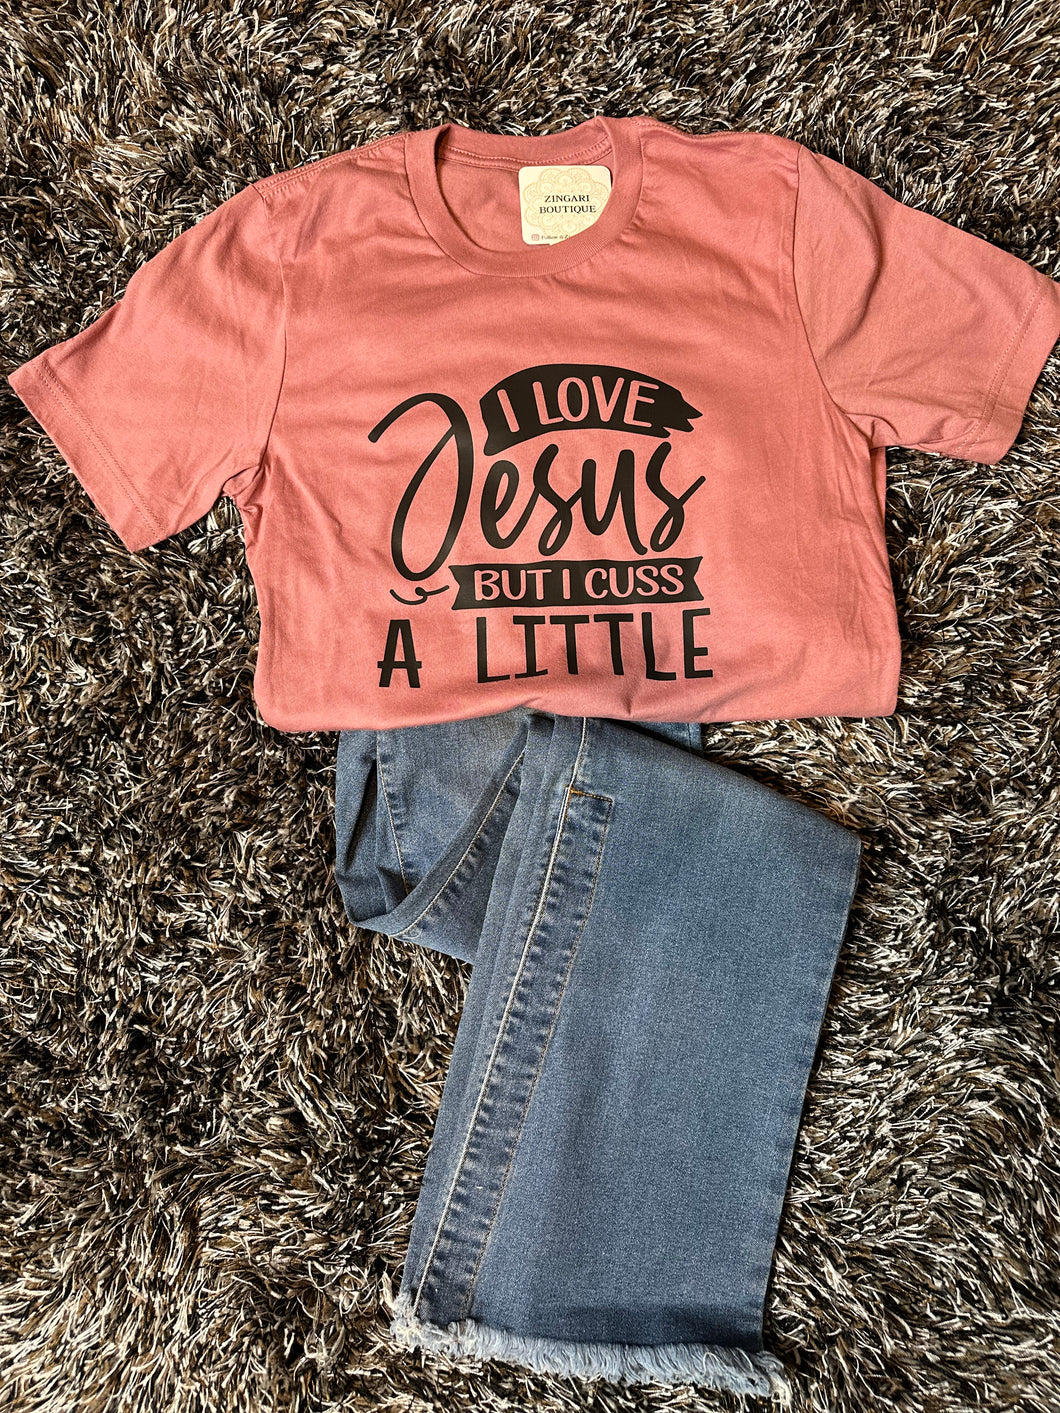 I love Jesus But I cuss a little Graphic T-Shirt